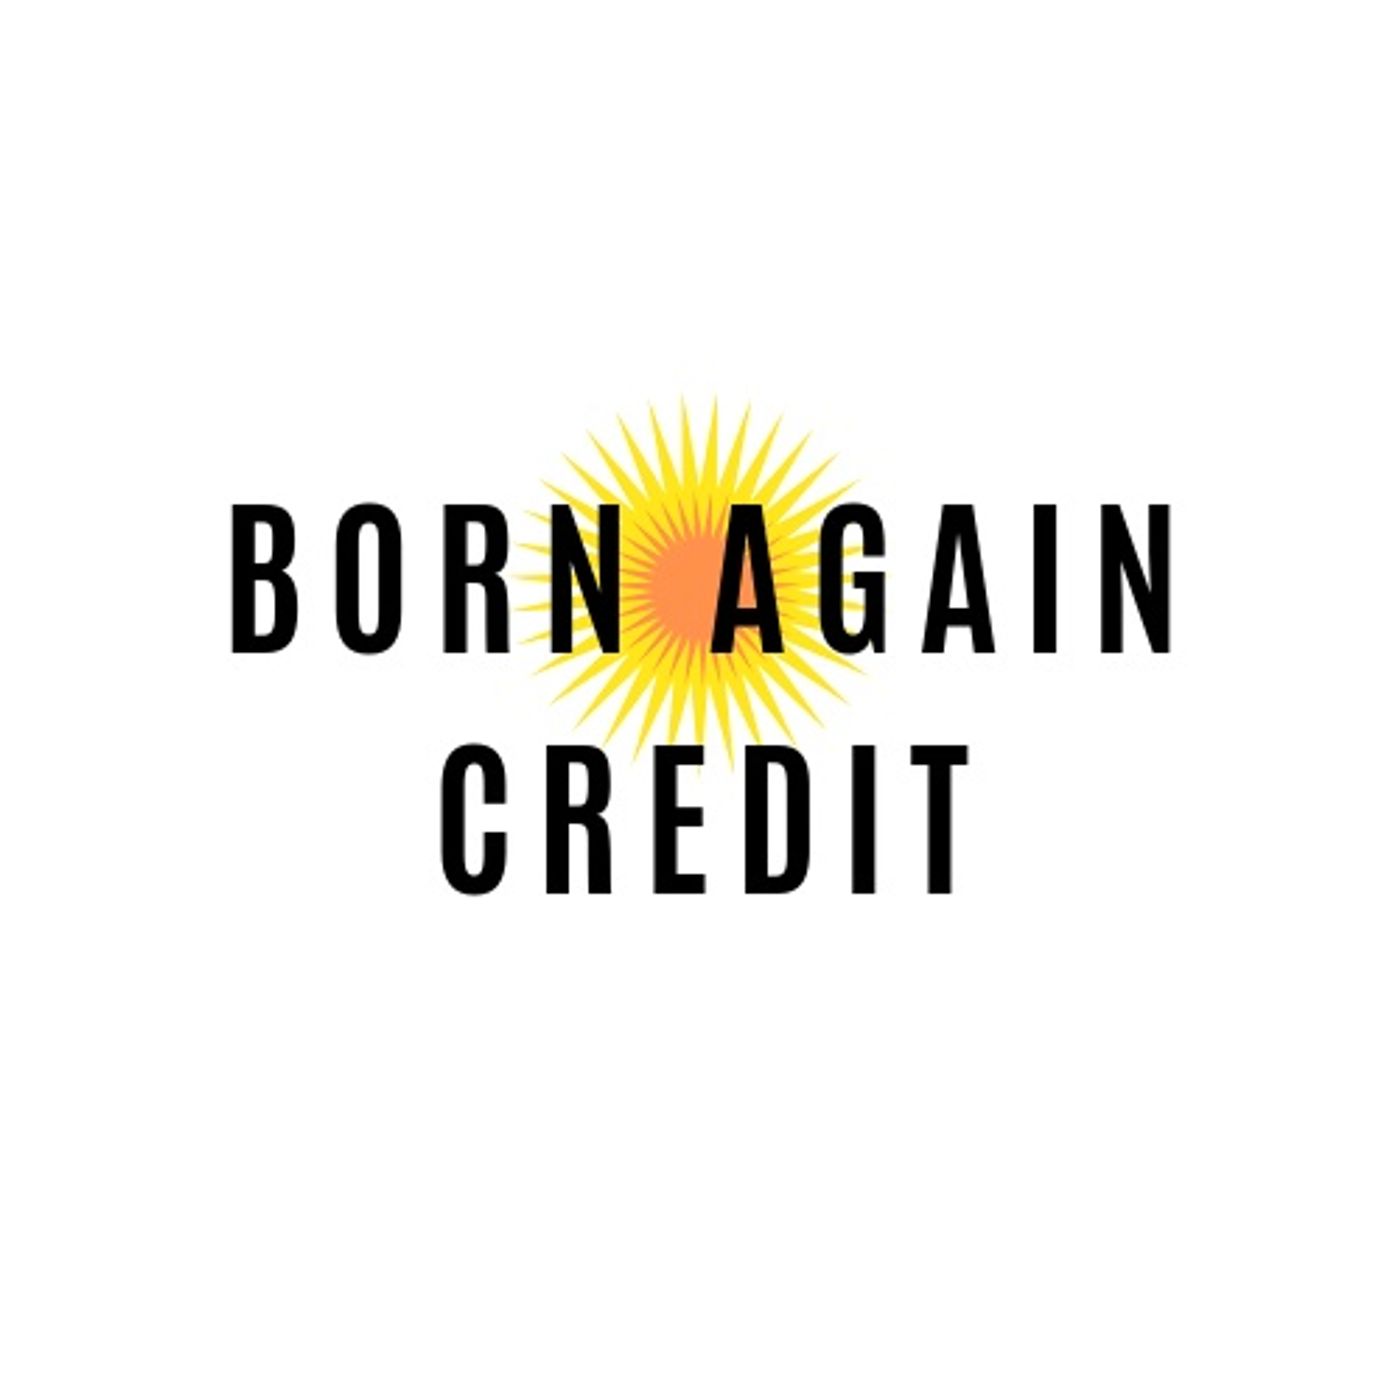 Born Again Credit Introduction